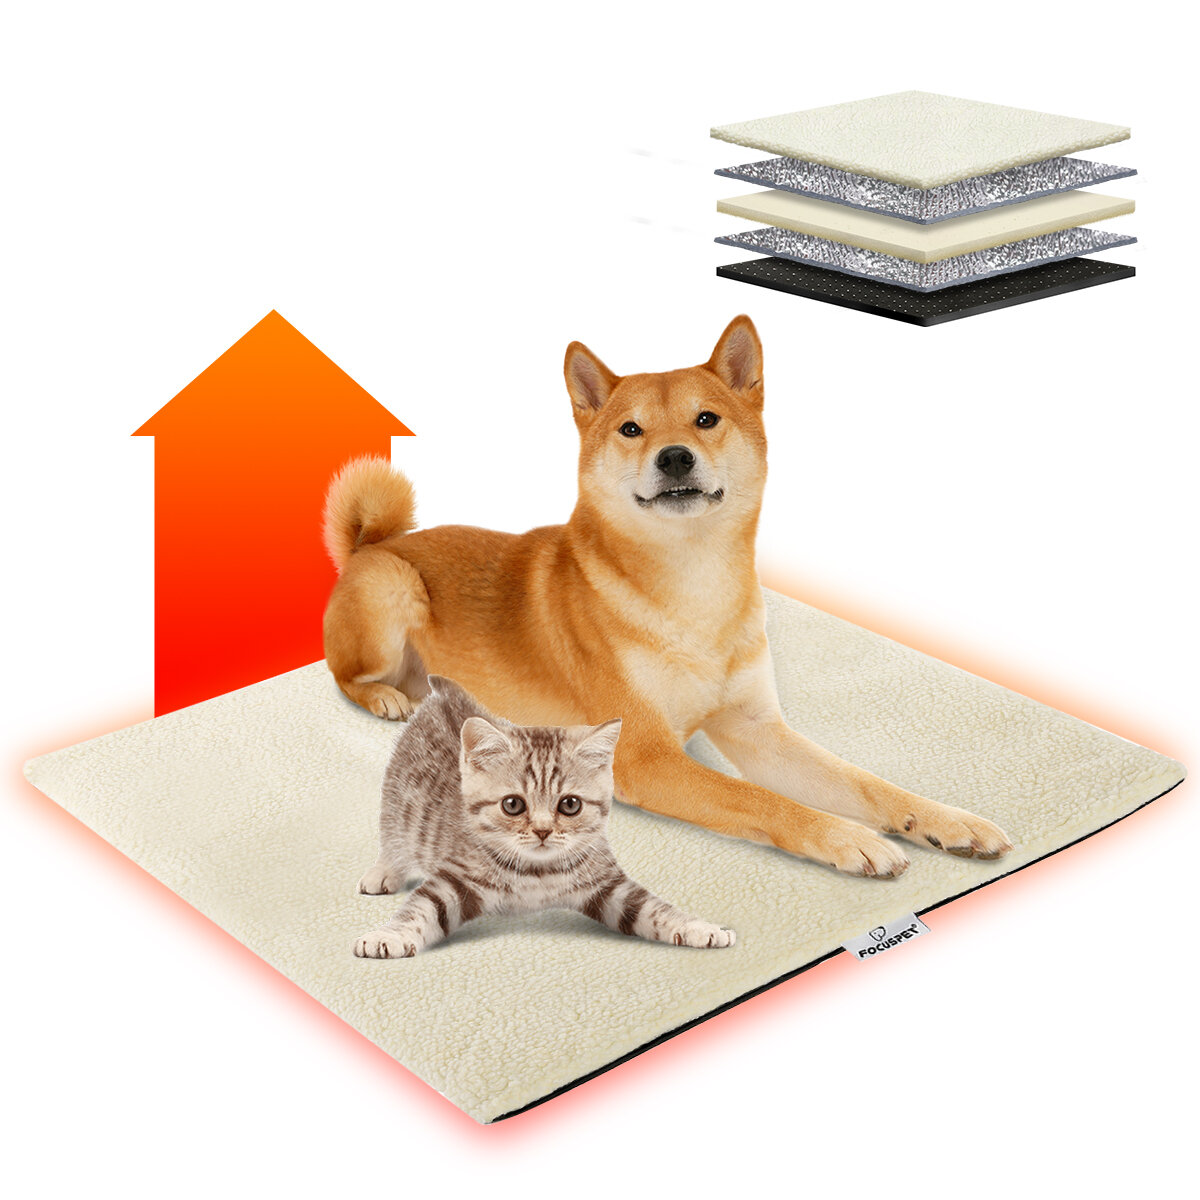 Focuspet Self-heating Blanket Warming Blanket Cat Dogs Pets Warming Mat Cat with Anti-slip Design Sl